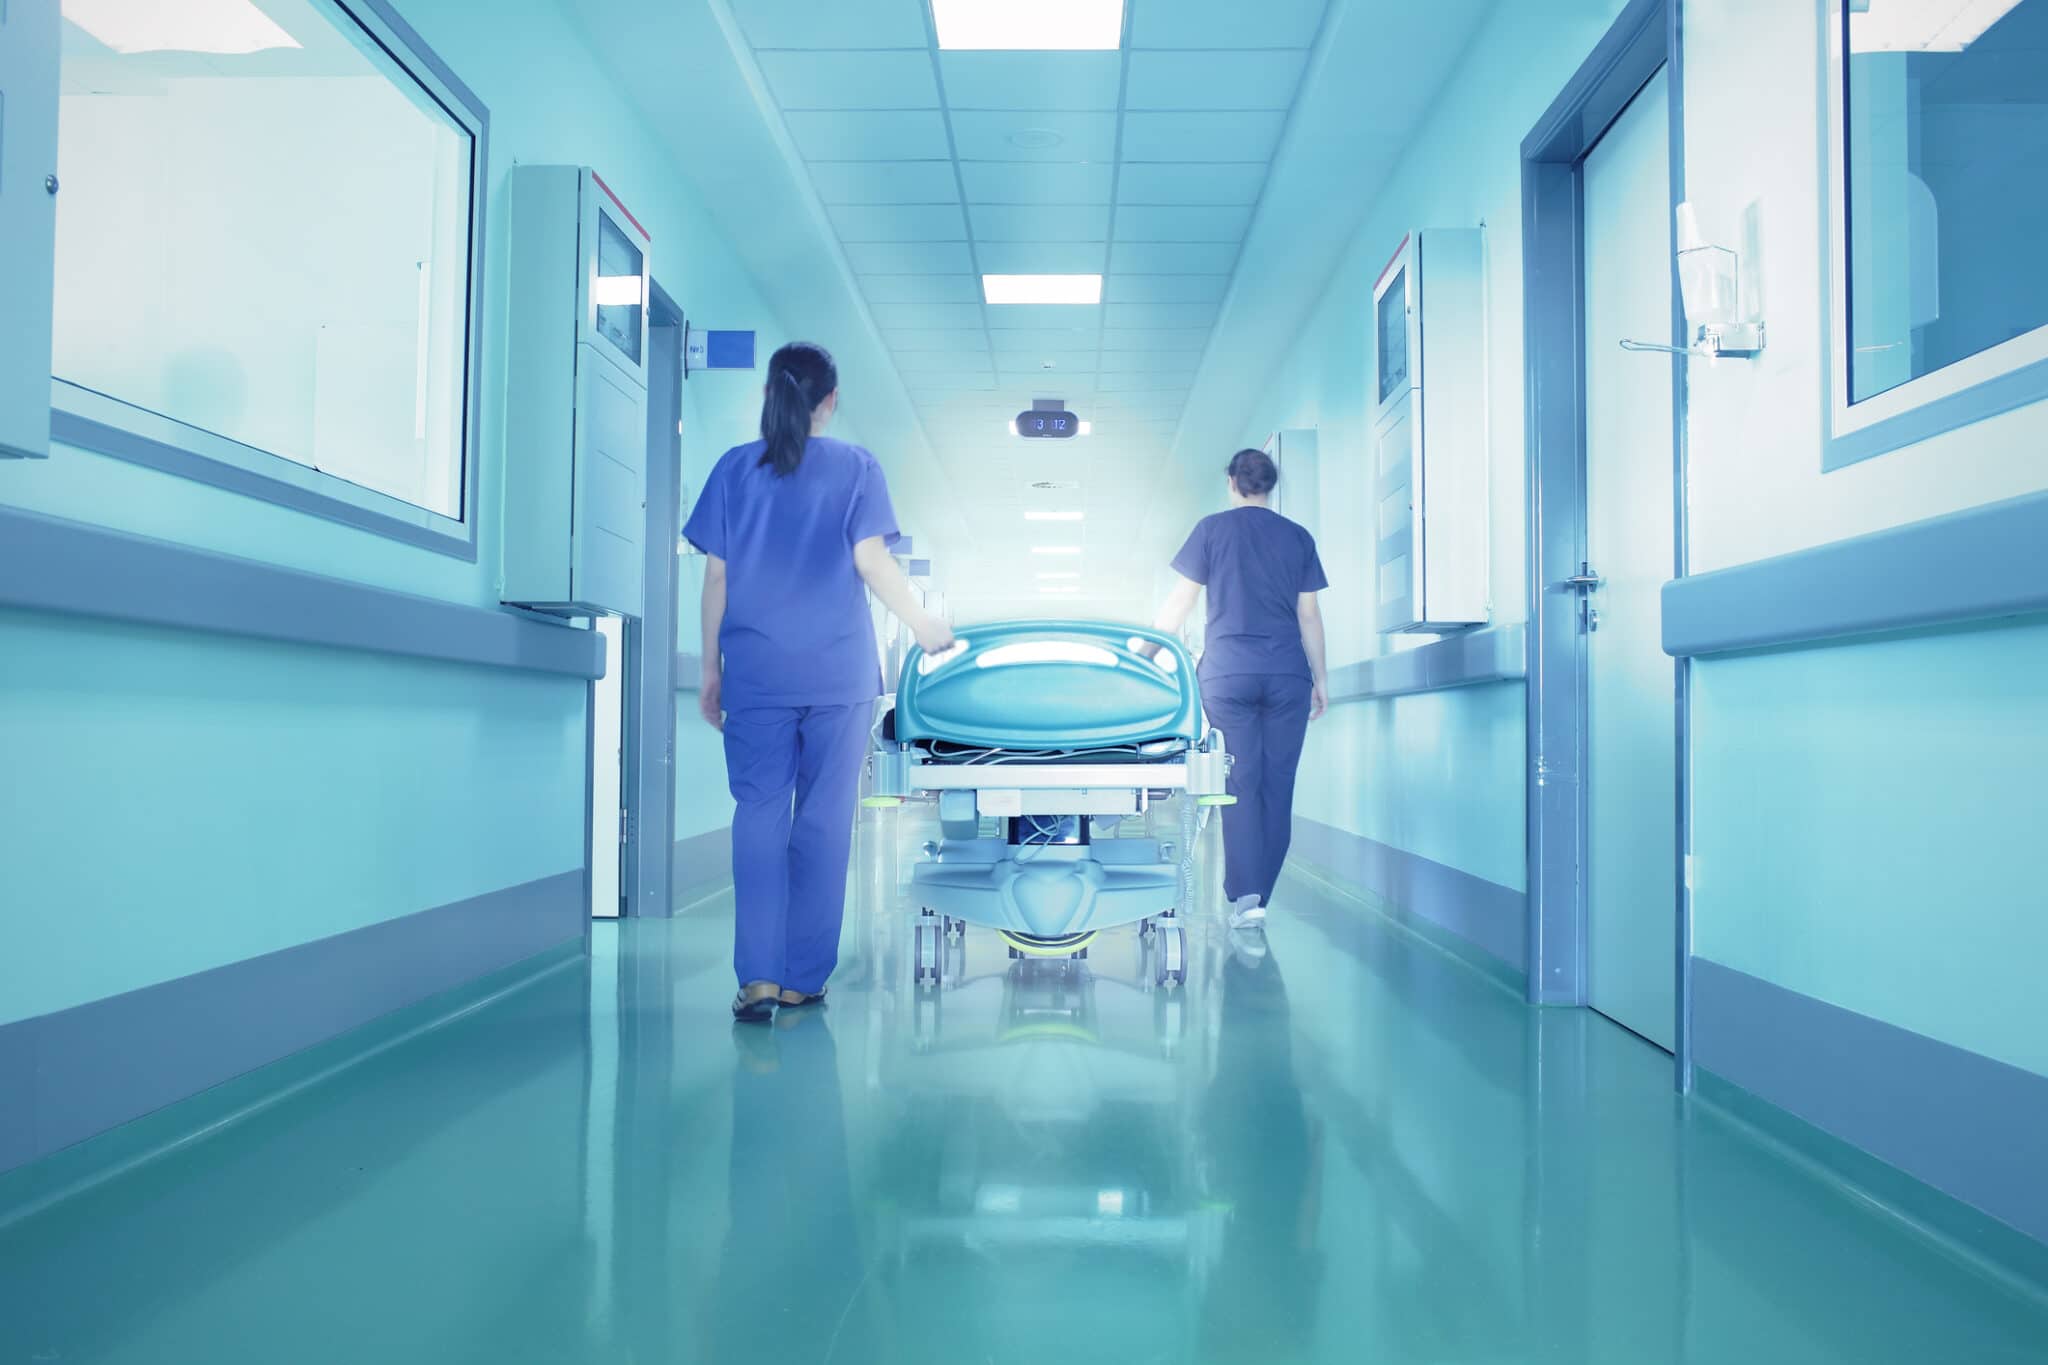 Nurses walking hospital bed through hallway